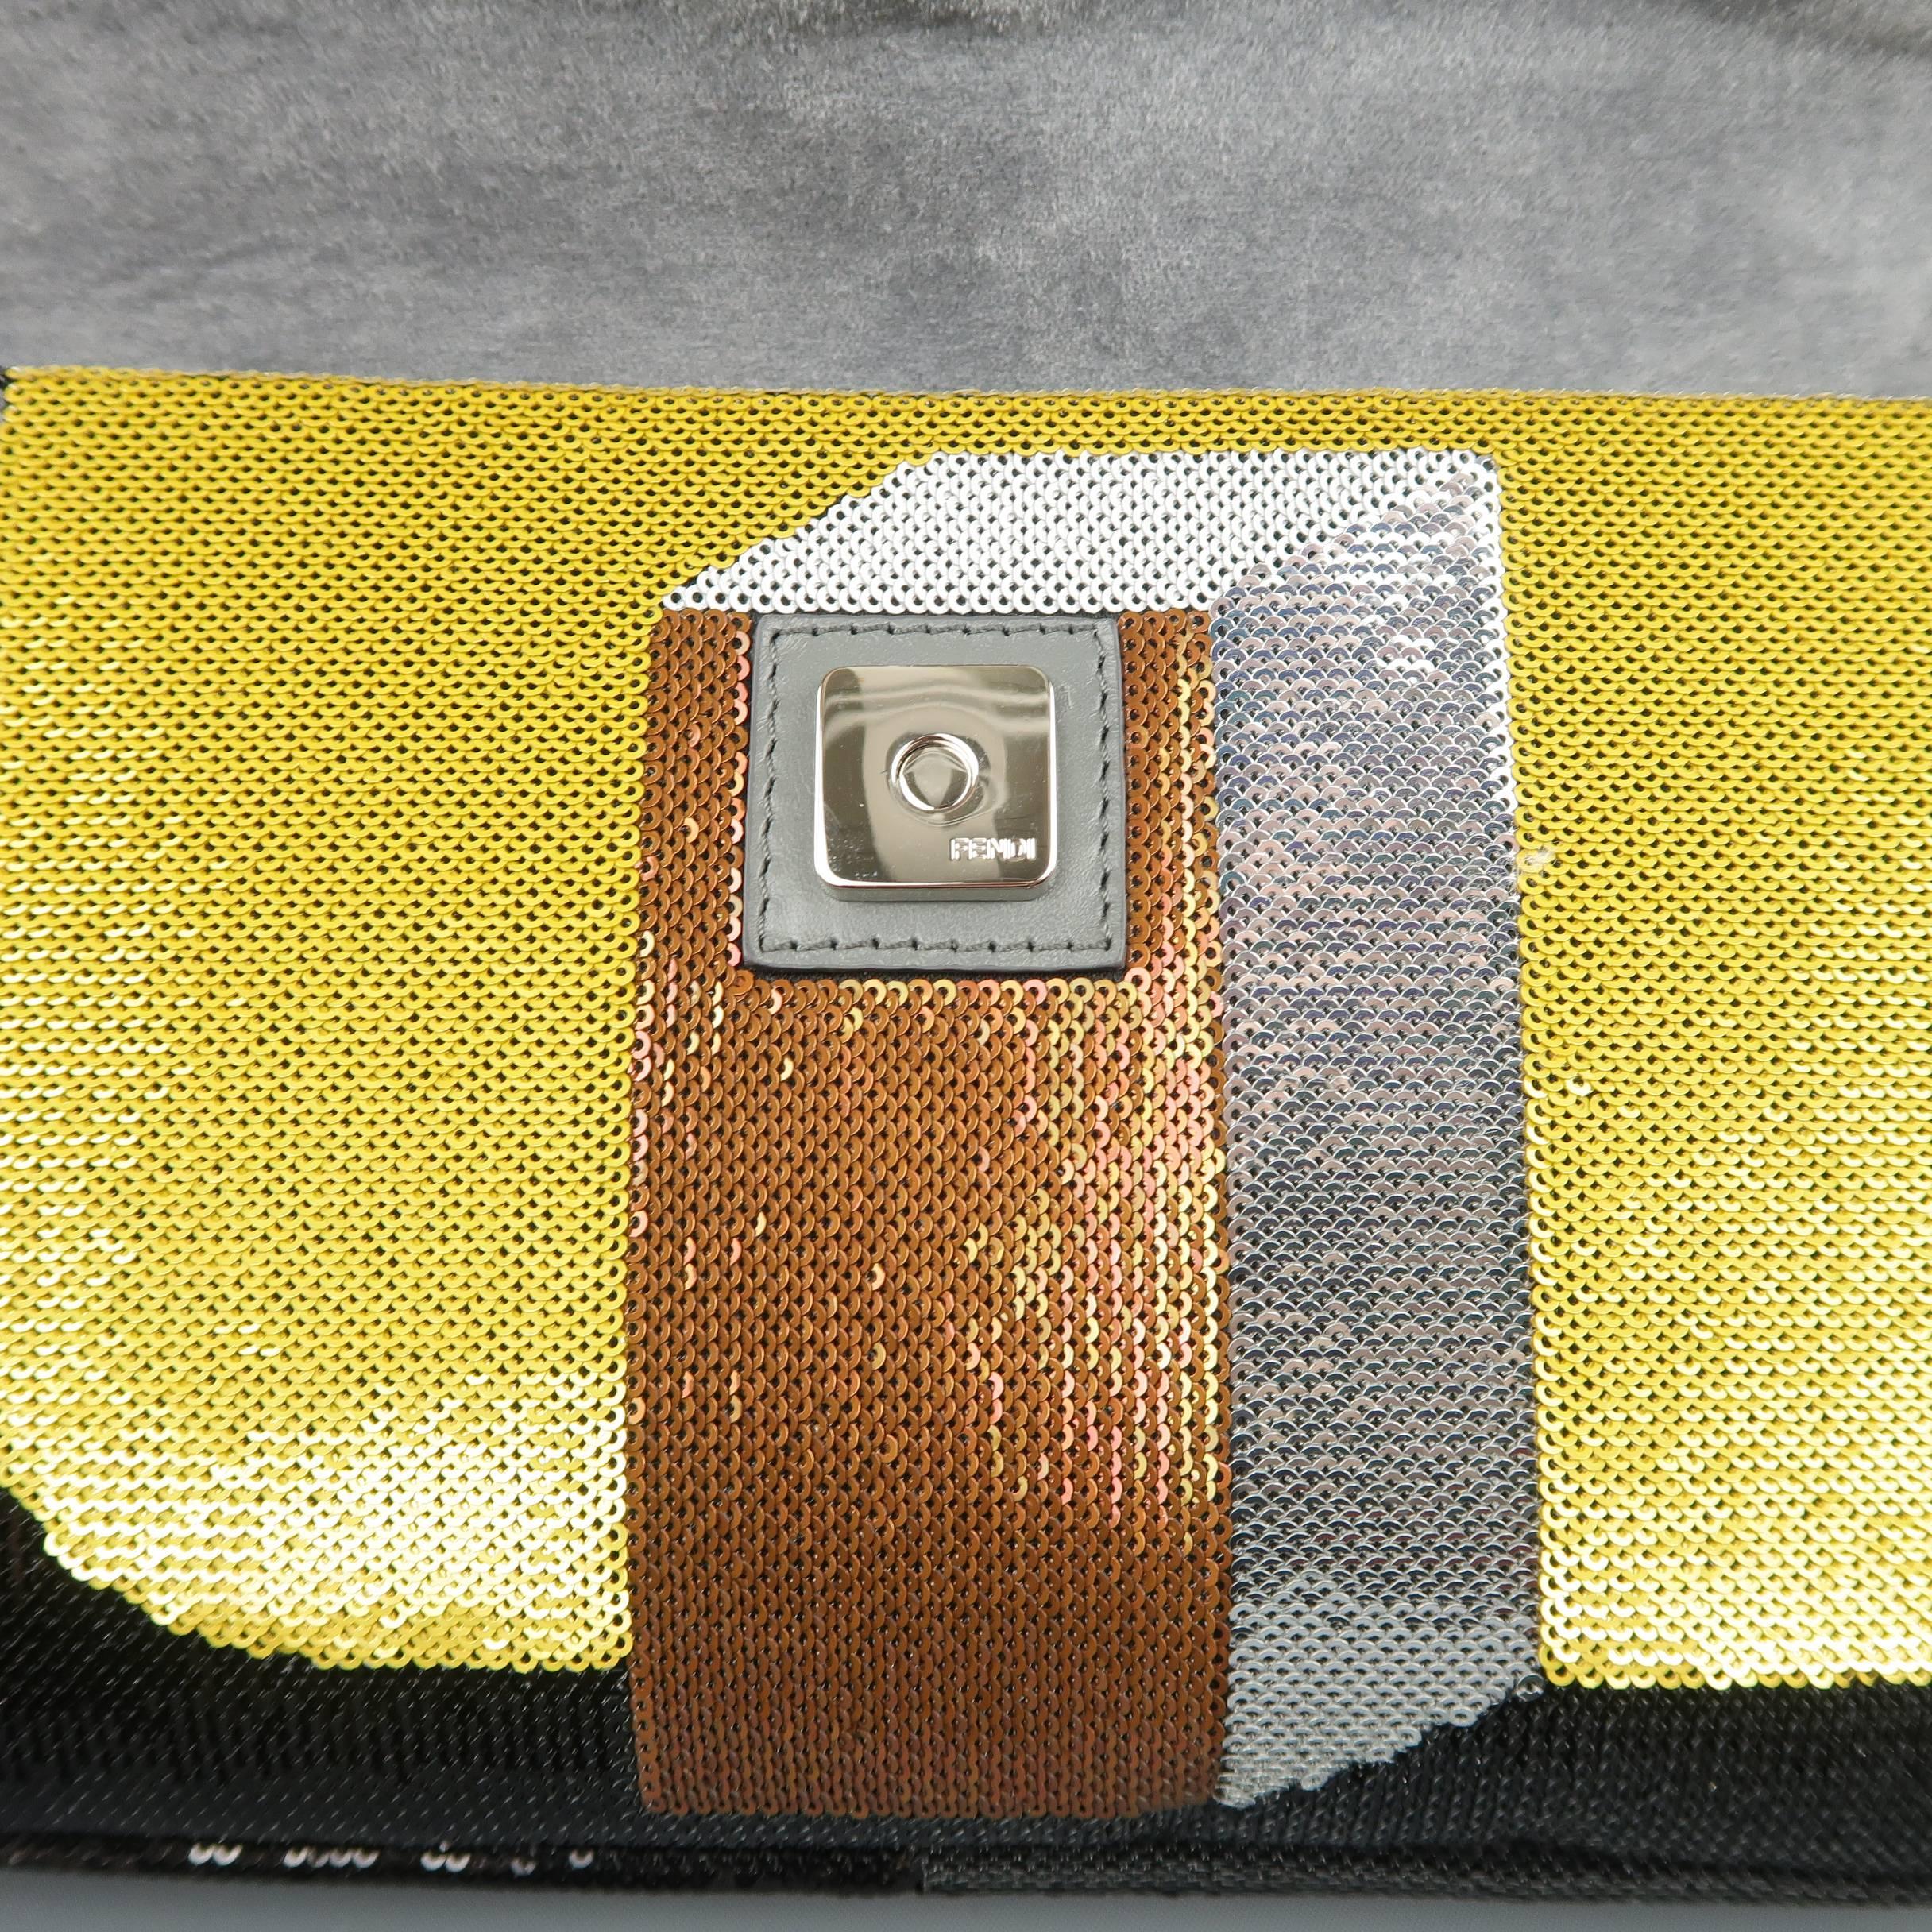 Fendi Gold Silver and Bronze Color Block Sequined Baguette Handbag 2